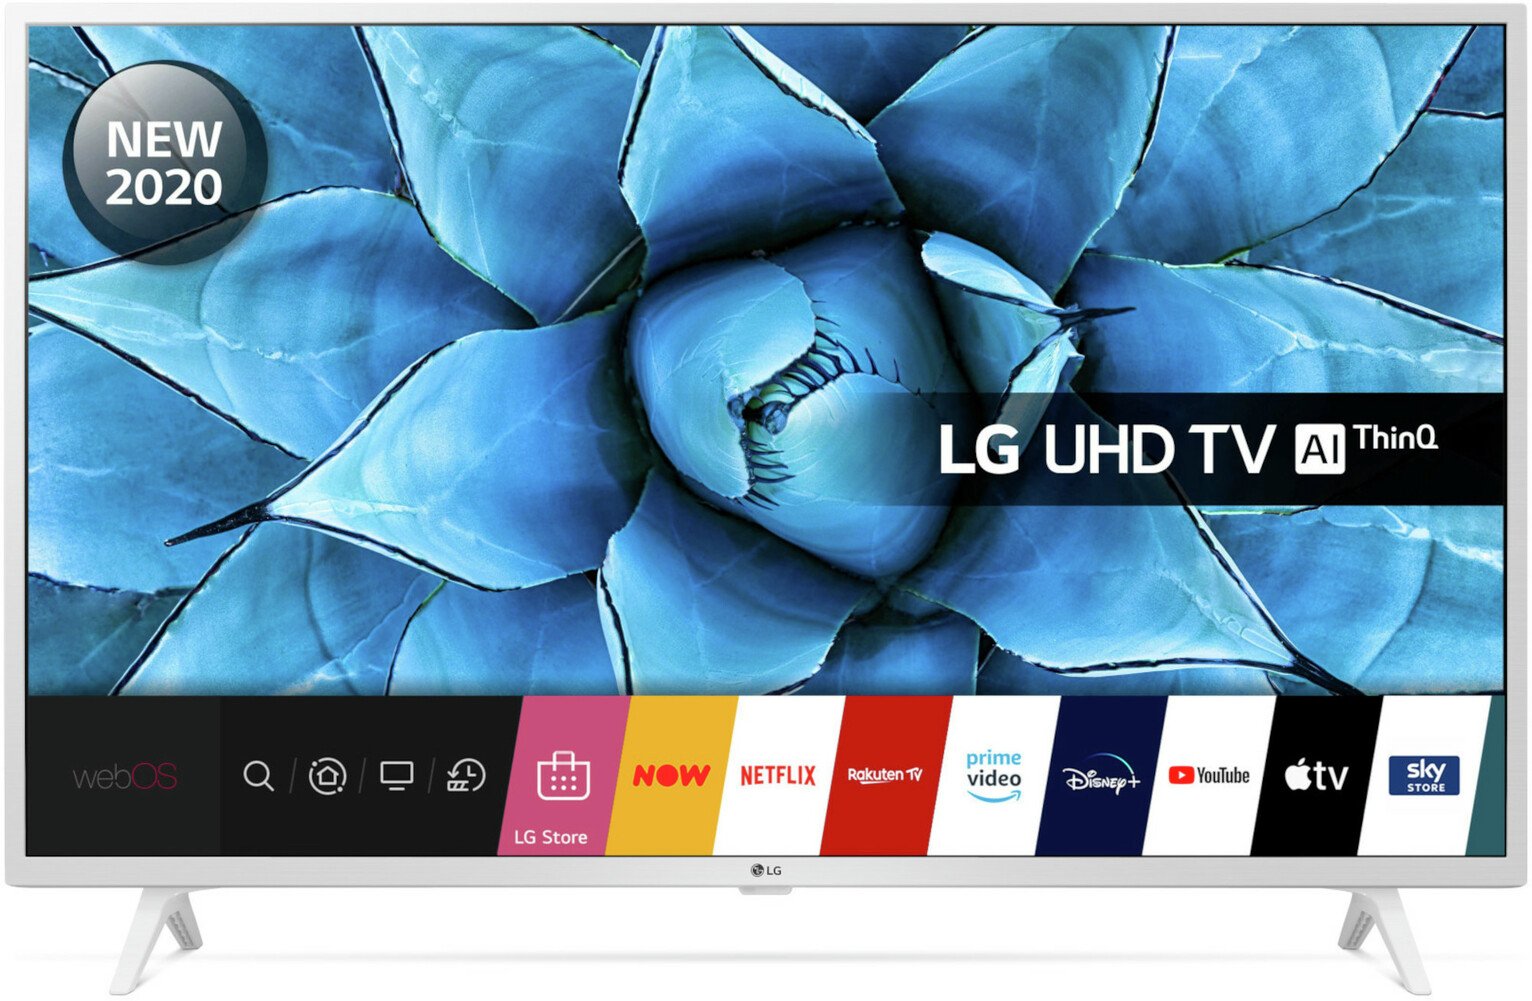 LG 49 Inch 49UN7390 Smart 4K Ultra HD LED TV - White